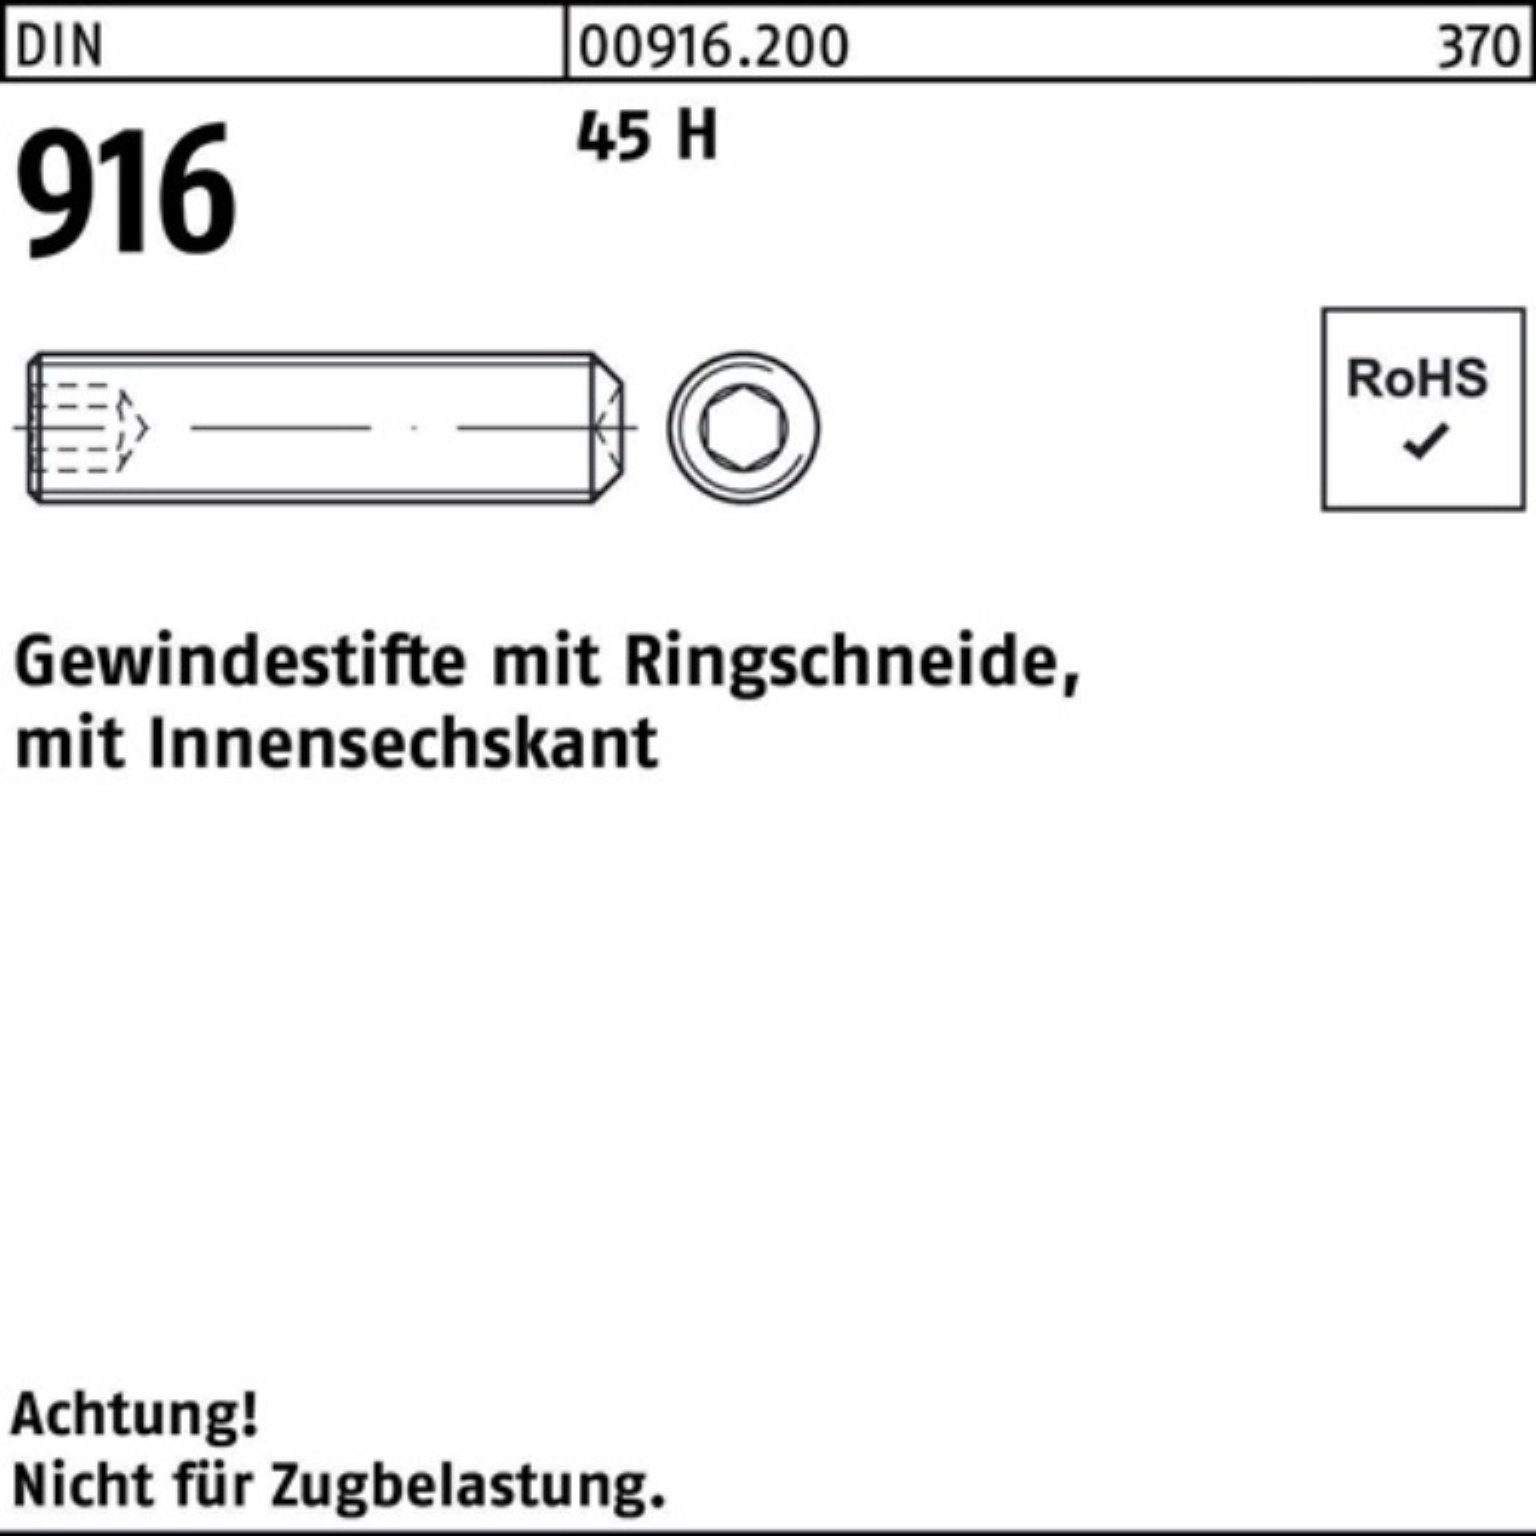 Reyher Gewindebolzen 100er Pack Gewindestift DIN 916 Ringschn./Innen-6kt M24x 35 45 H 50 St